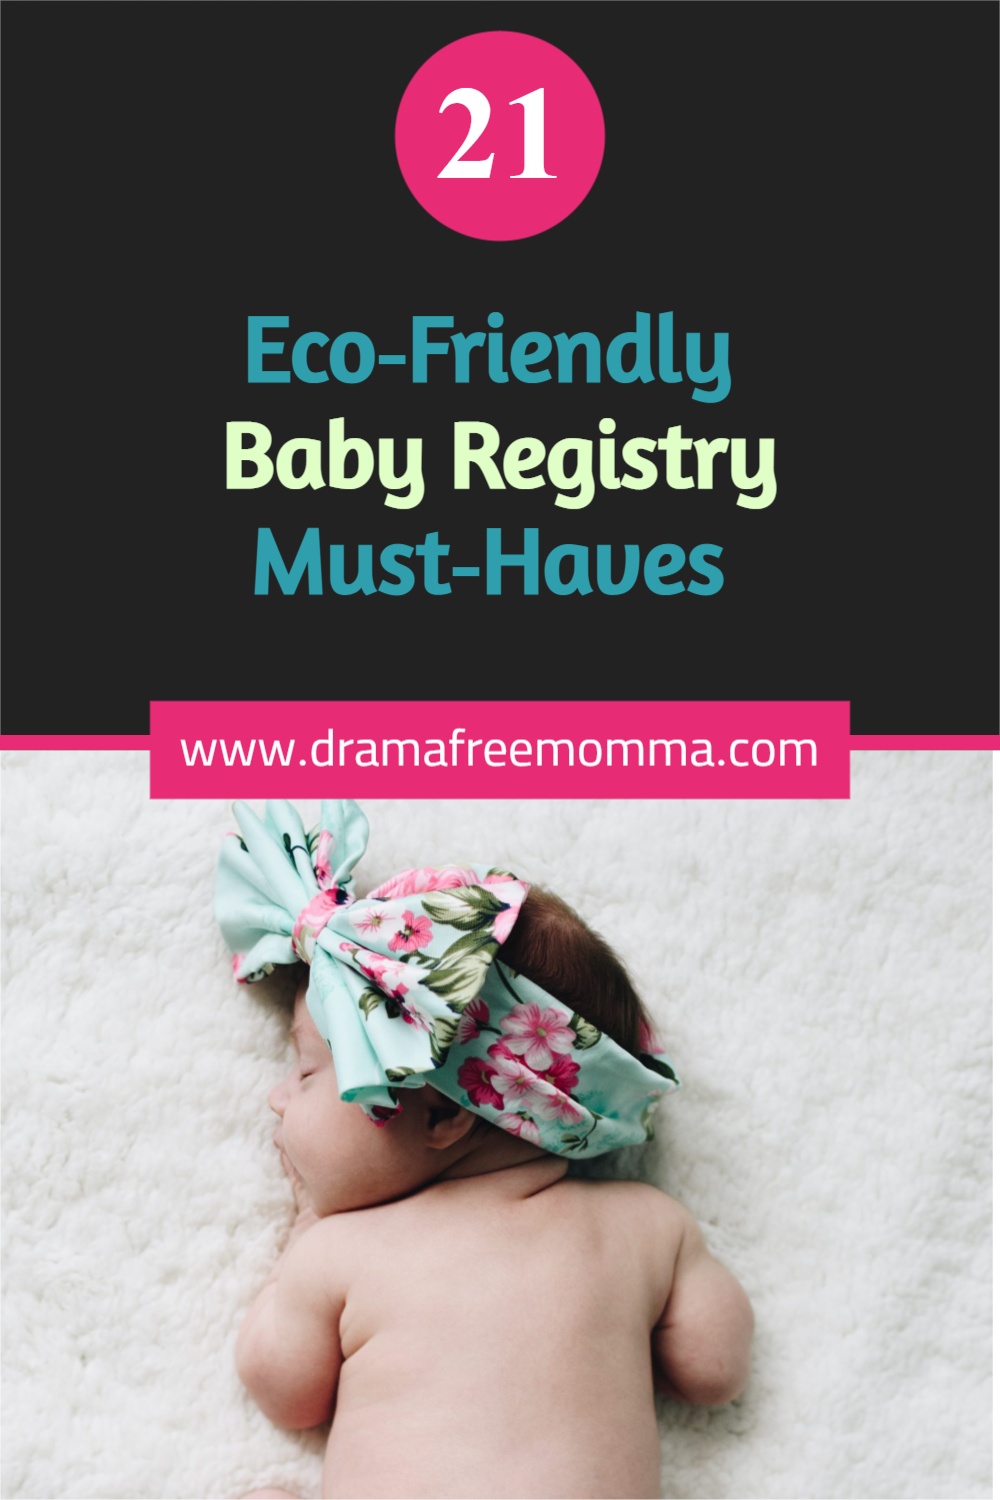 eco-friendly baby registry, eco-friendly baby products, eco-friendly baby items, eco-friendly baby stuff, eco-friendly nursery, eco-friendly diapering, reusable diapers, reusable baby products, eco-mom, eco-friendly parenting, new mom, pregnancy, baby registry, how to create an eco-friendly baby registry, eco-friendly baby shower gifts, eco-friendly baby care, green baby products, earth-friendly baby, eco-conscious mom, baby registry must haves